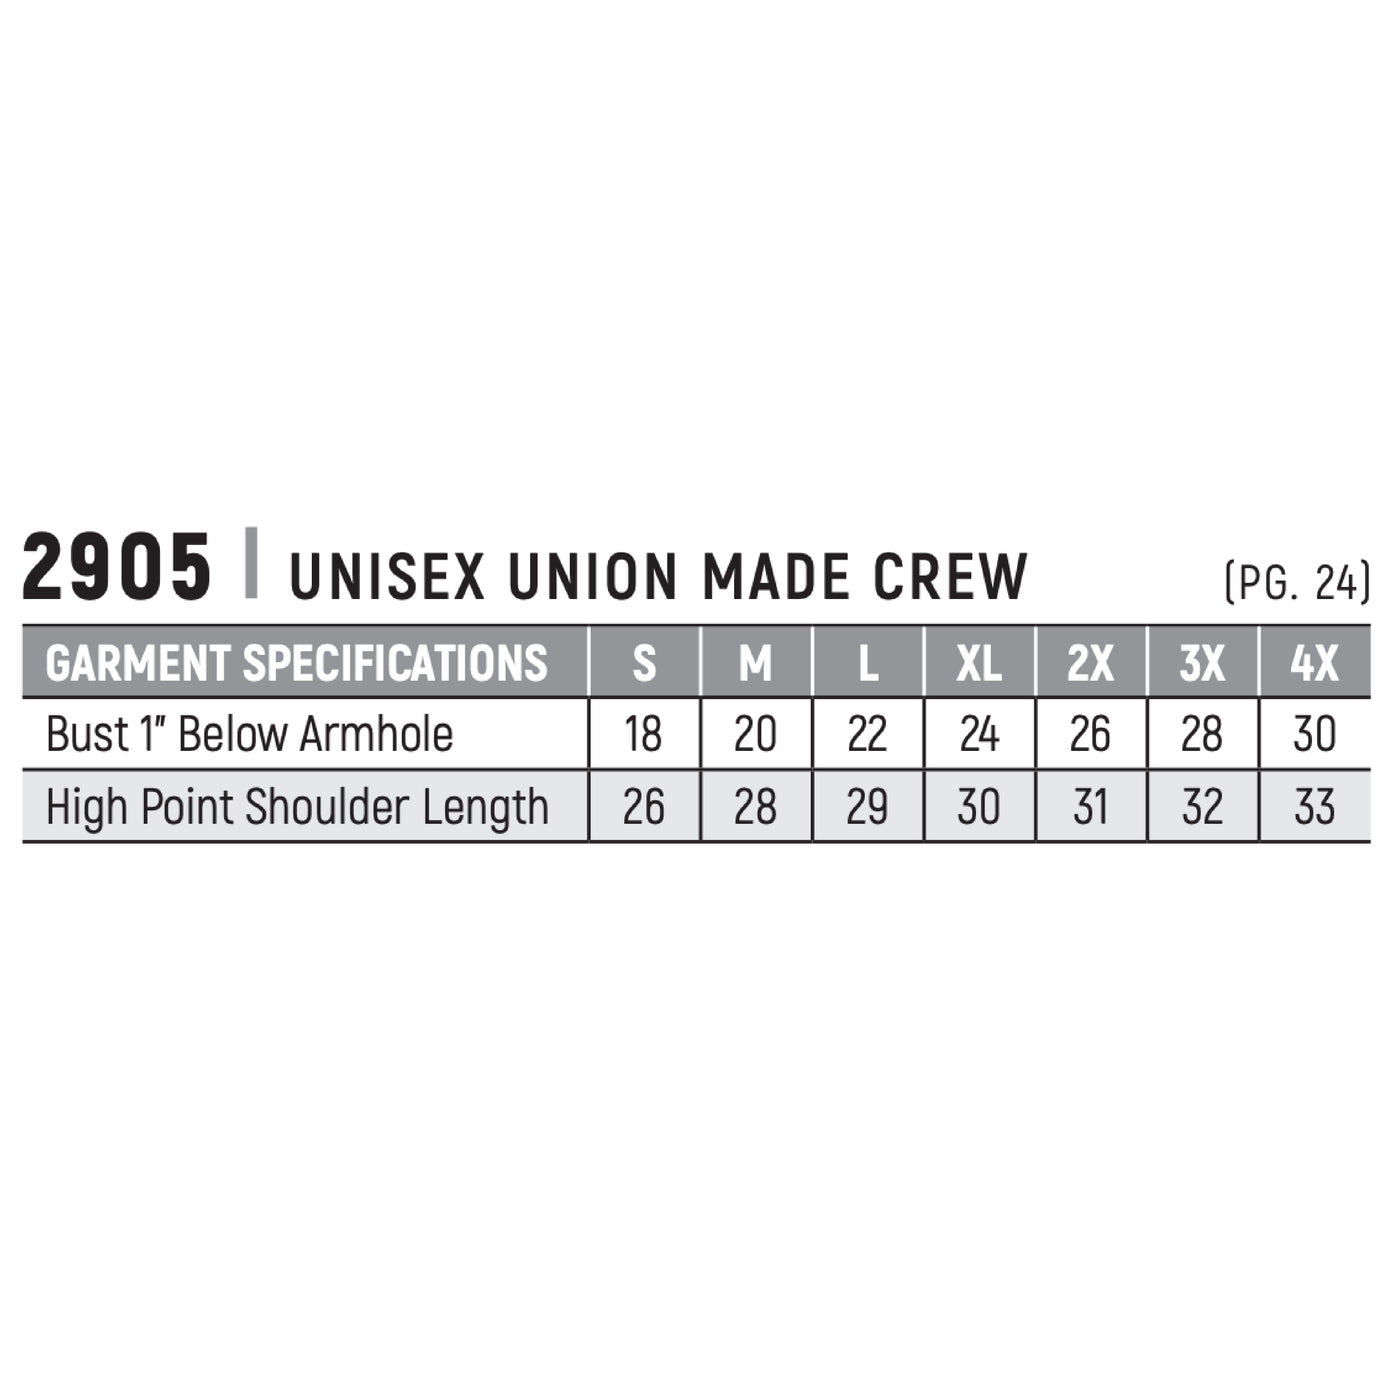 UBC 255 - Fist Of Fury Union Made Black T-Shirt